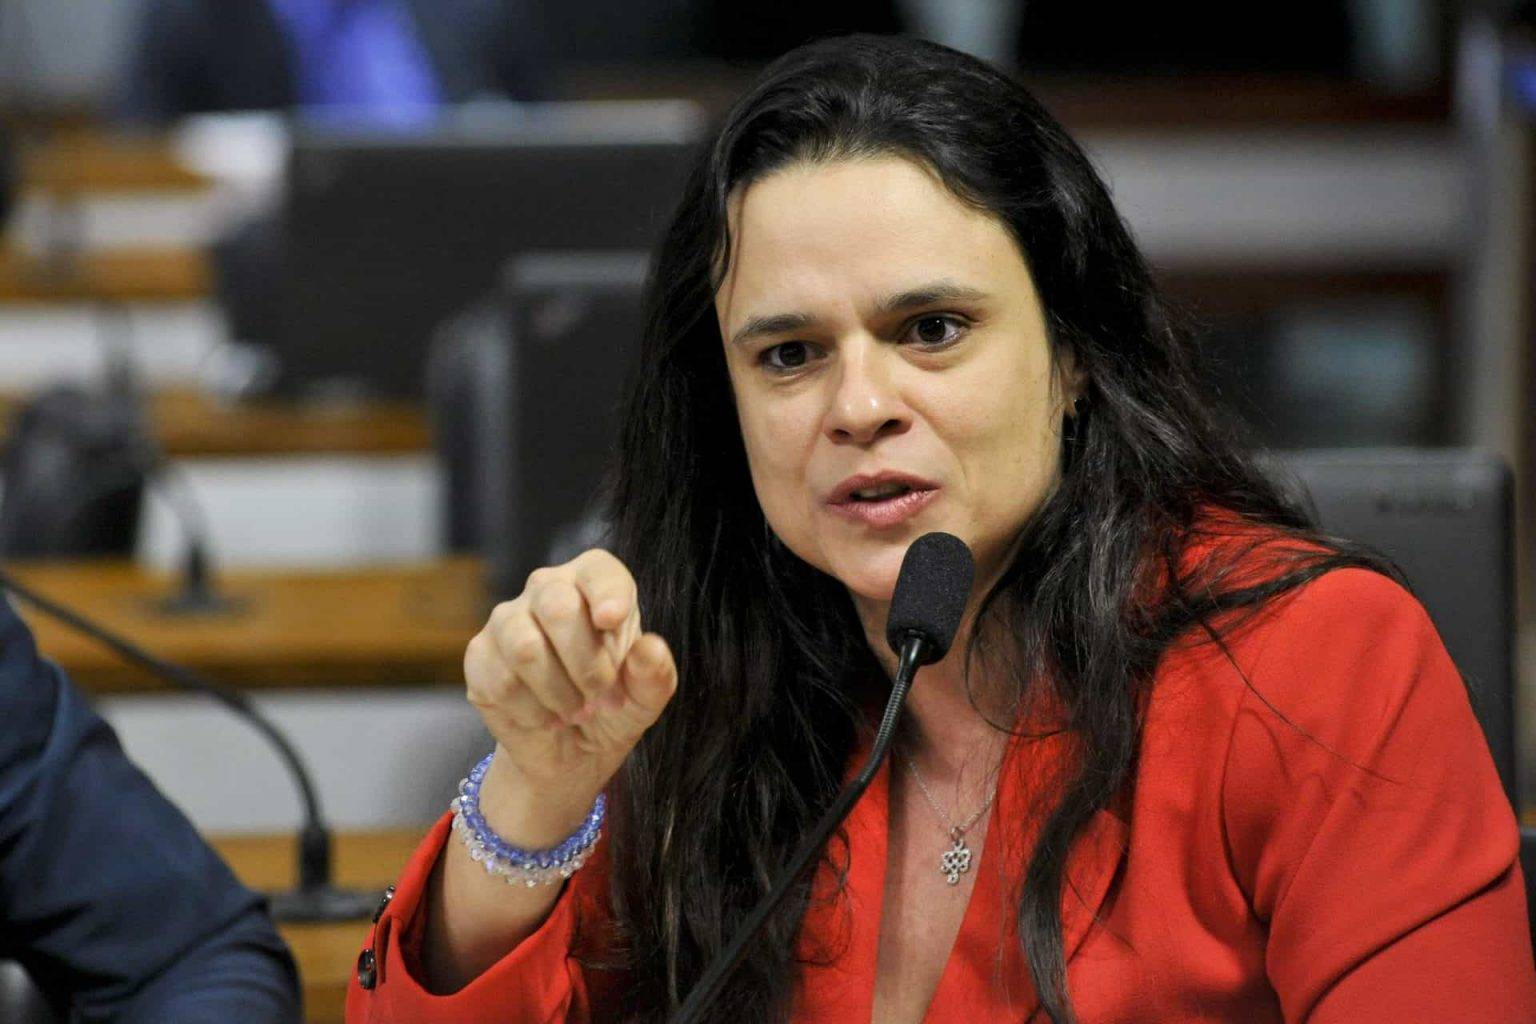 Janaína Paschoal afirma: “O desejo de derrubar Bolsonaro está levando ao abandono da lógica”